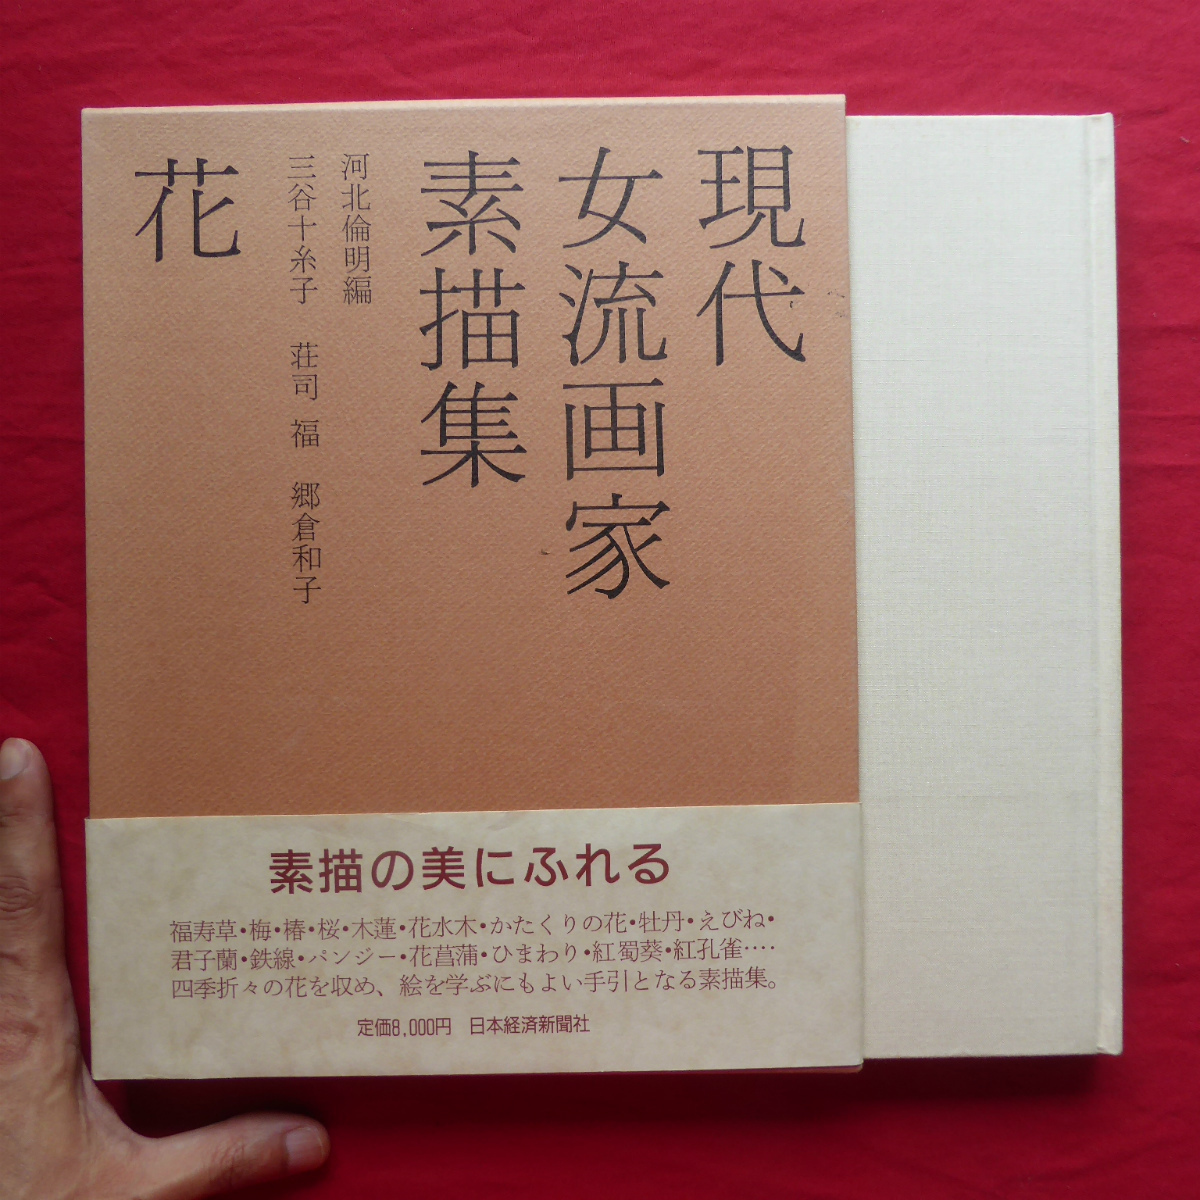 θ22/मिचियाकी कावाकिता द्वारा संपादित [आधुनिक महिला चित्रकारों द्वारा बनाए गए रेखाचित्रों का संग्रह [फूल]/जिटो मितानि, फुकु शोजी, काजुको गोकुरा/निहोन केइज़ाई शिंबुन, 1986] @2, चित्रकारी, कला पुस्तक, संग्रह, कला पुस्तक